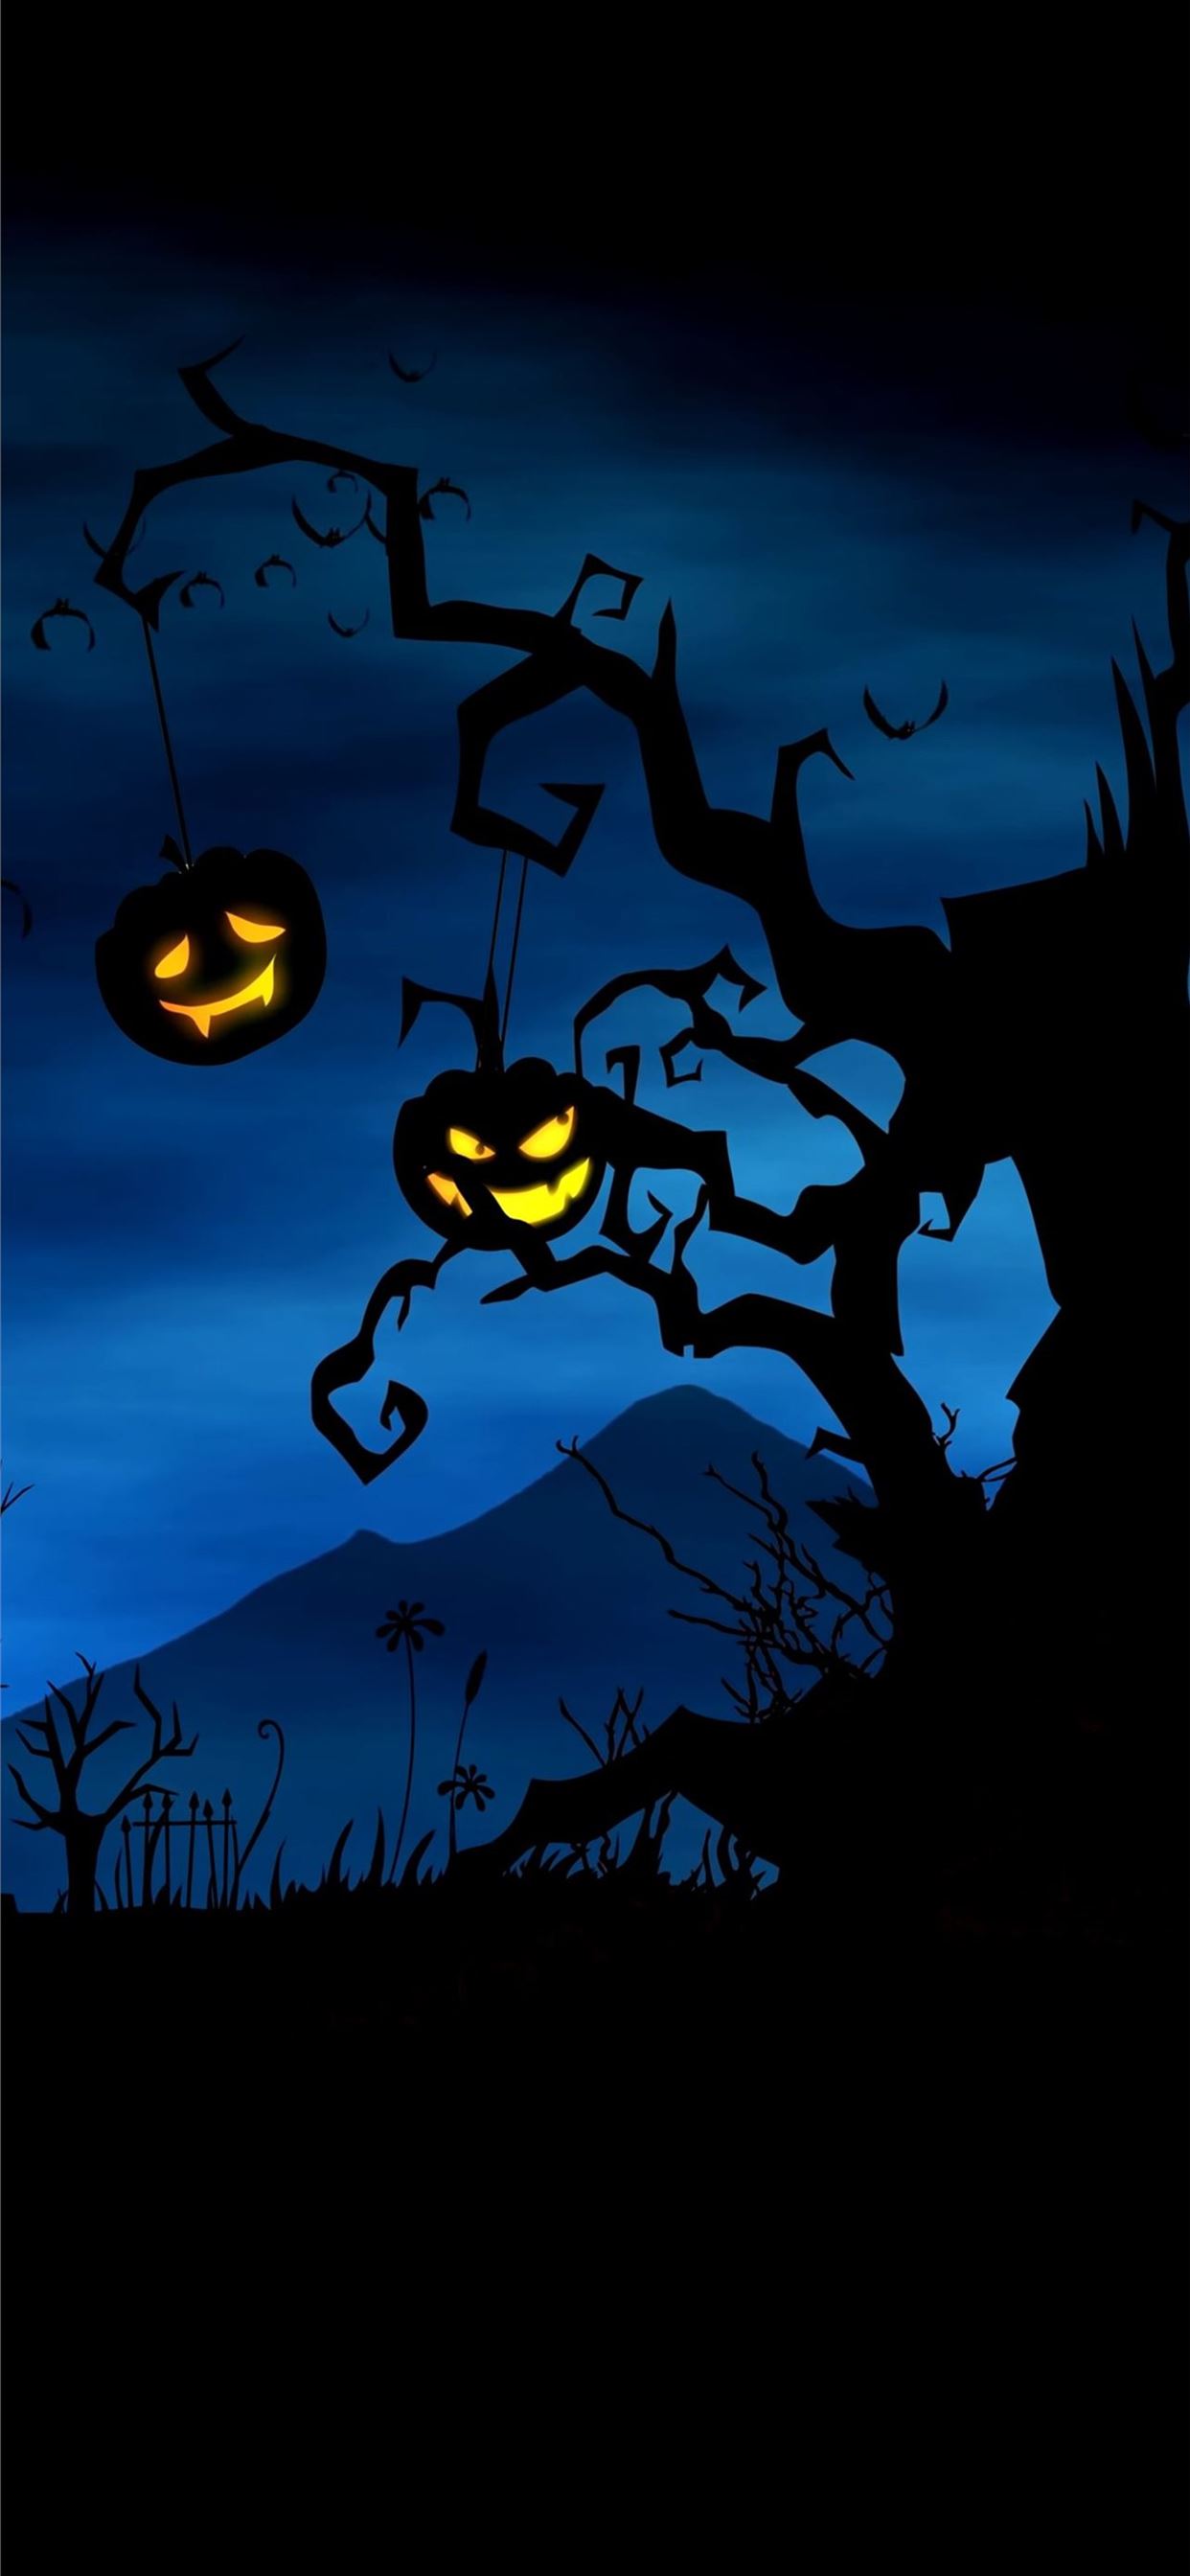 5200 Halloween Background Blue Illustrations RoyaltyFree Vector  Graphics  Clip Art  iStock